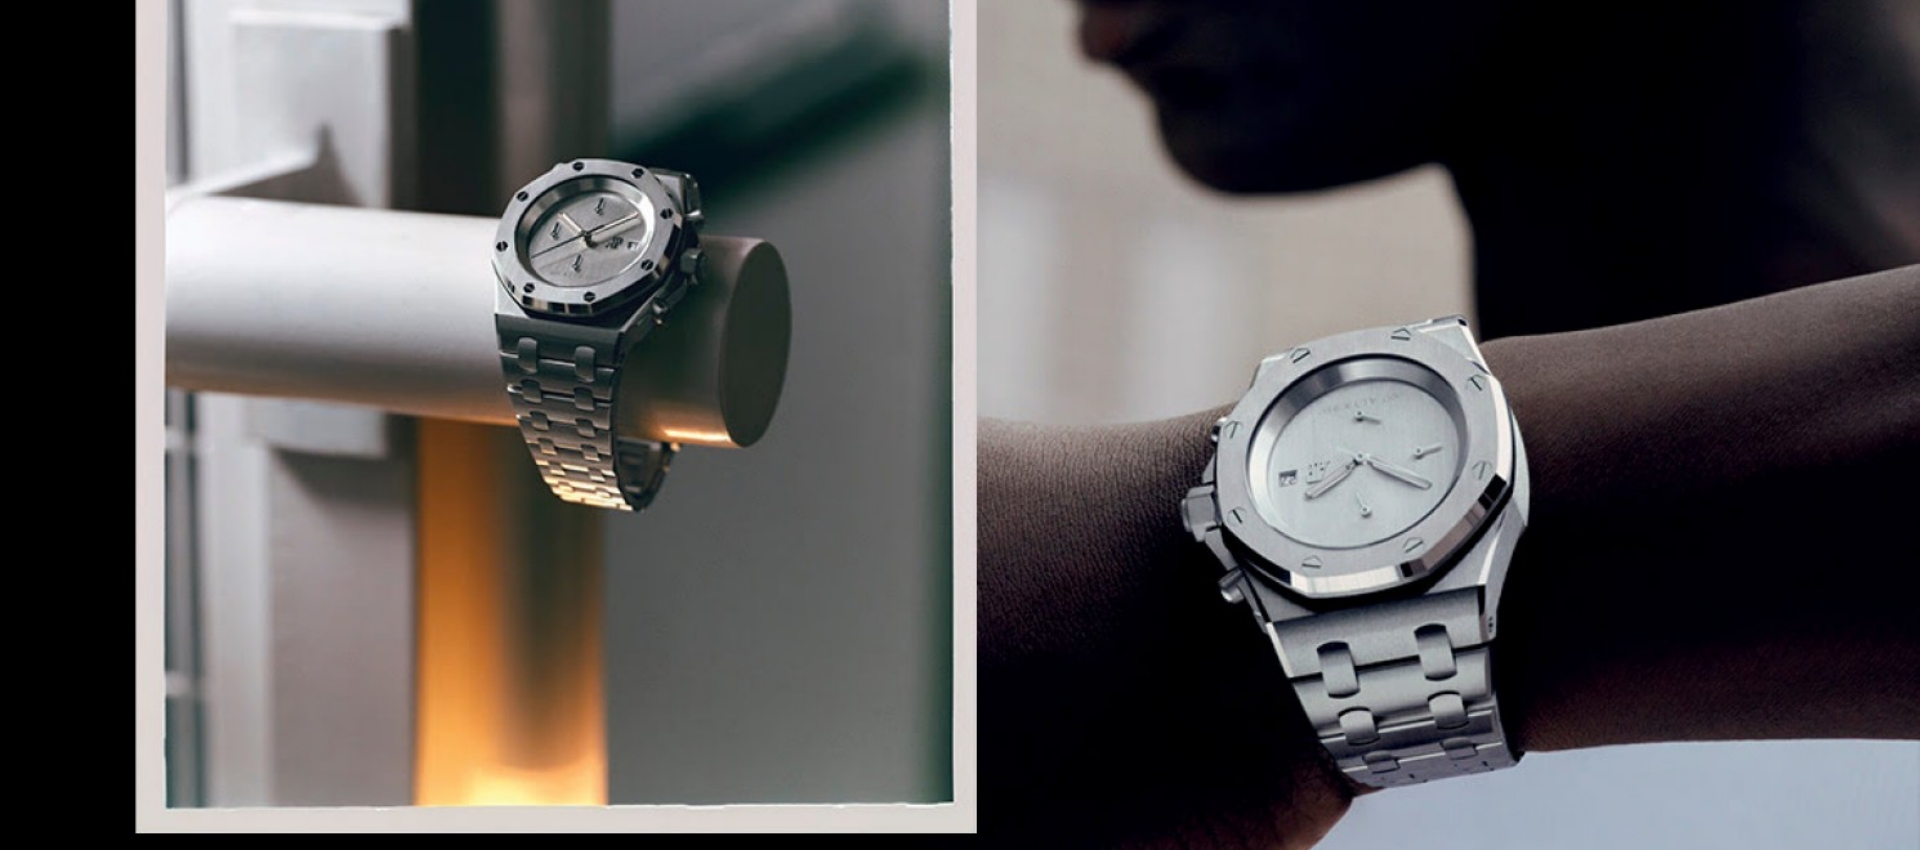 Chiếc đồng hồ tối giản của Audemars Piguet và Matthew Williams